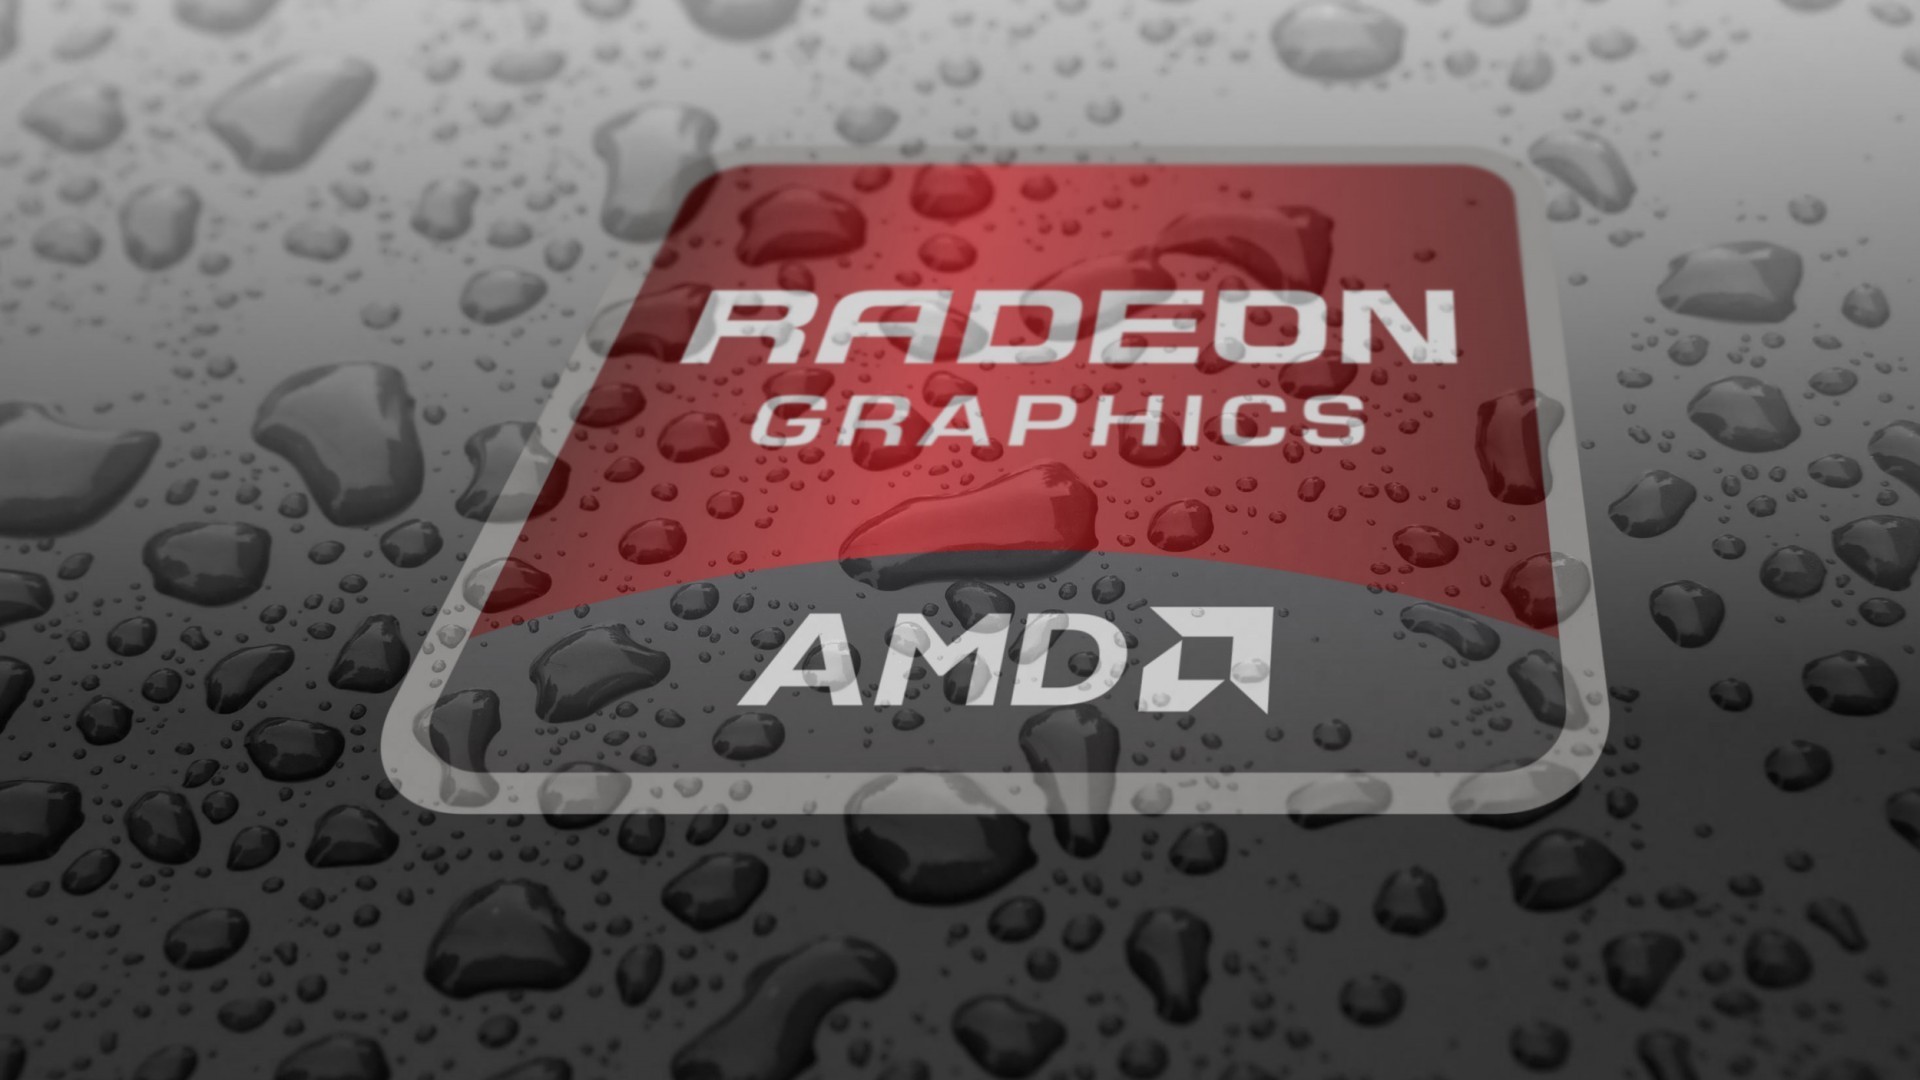 1920x1080 AMD Radeon Wallpaper